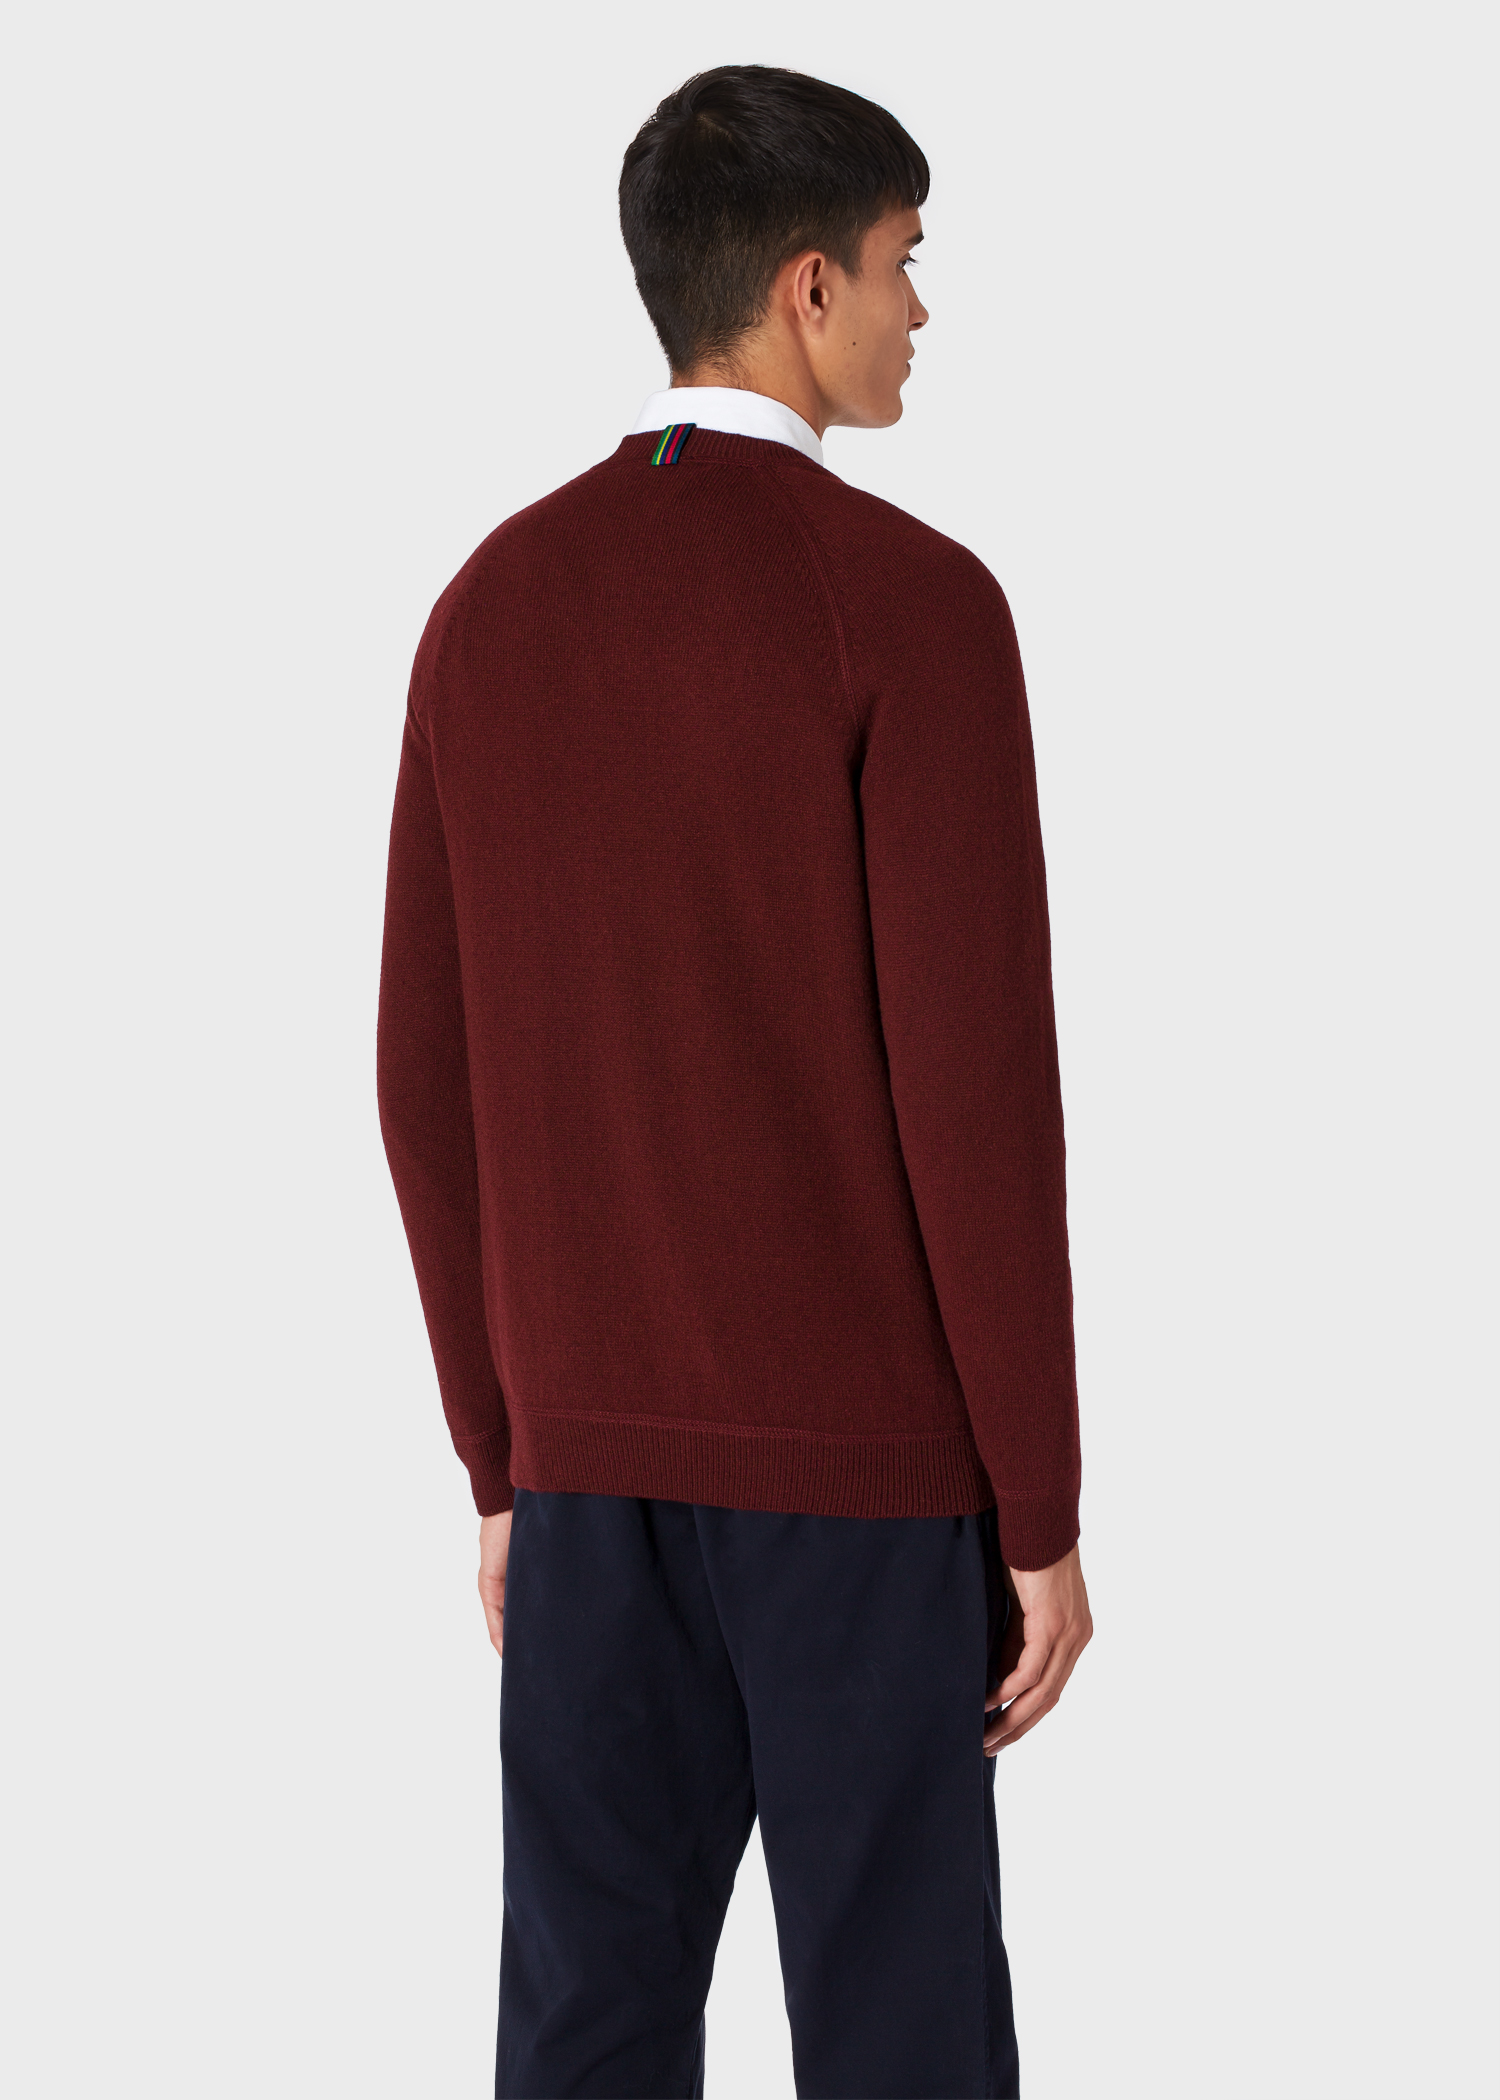 Model back close up - Men's Burgundy Lambswool Raglan Sweater Paul Smith